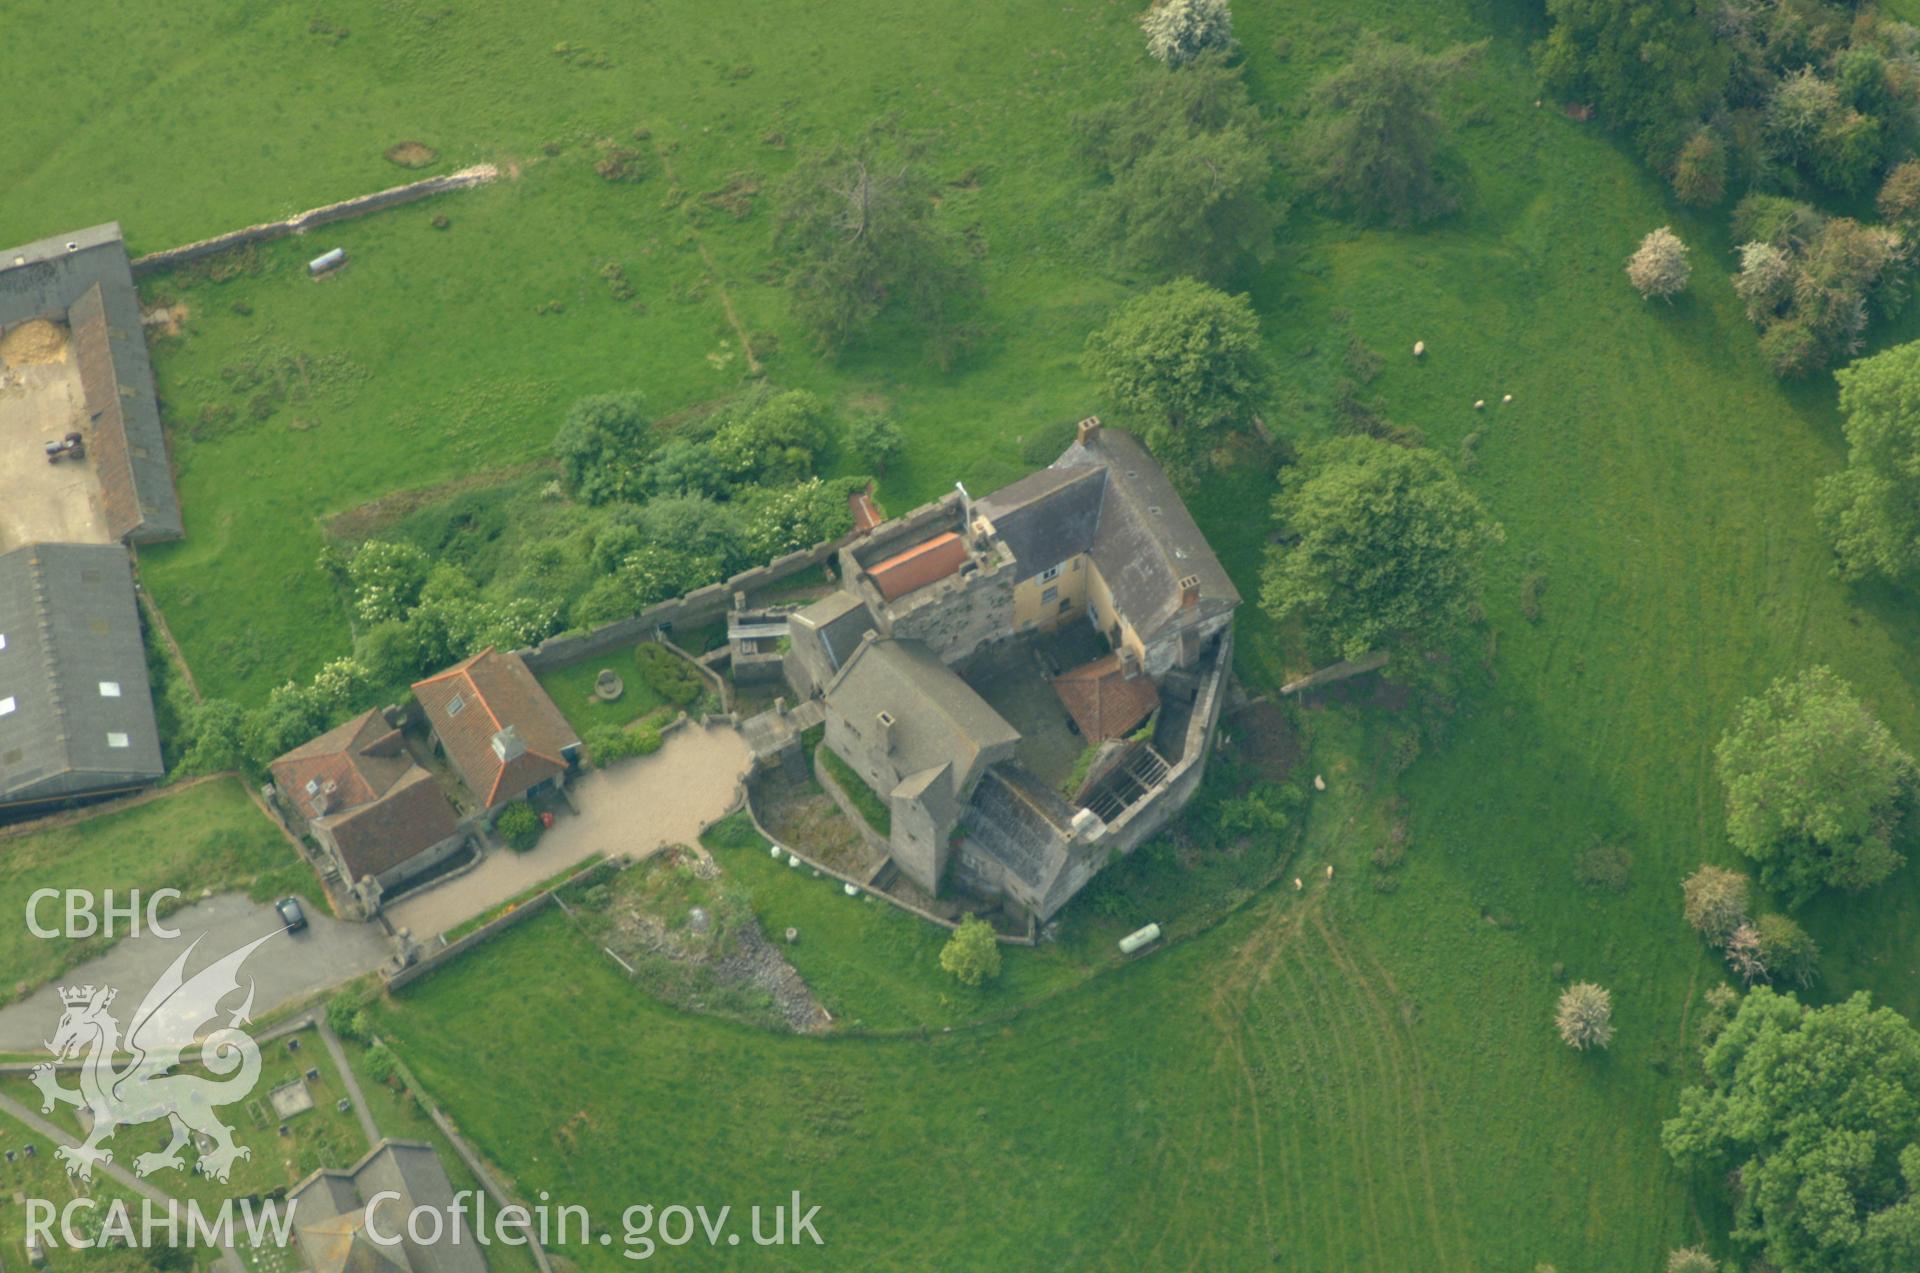 RCAHMW colour oblique aerial photograph of Penhow Castle taken on 26/05/2004 by Toby Driver